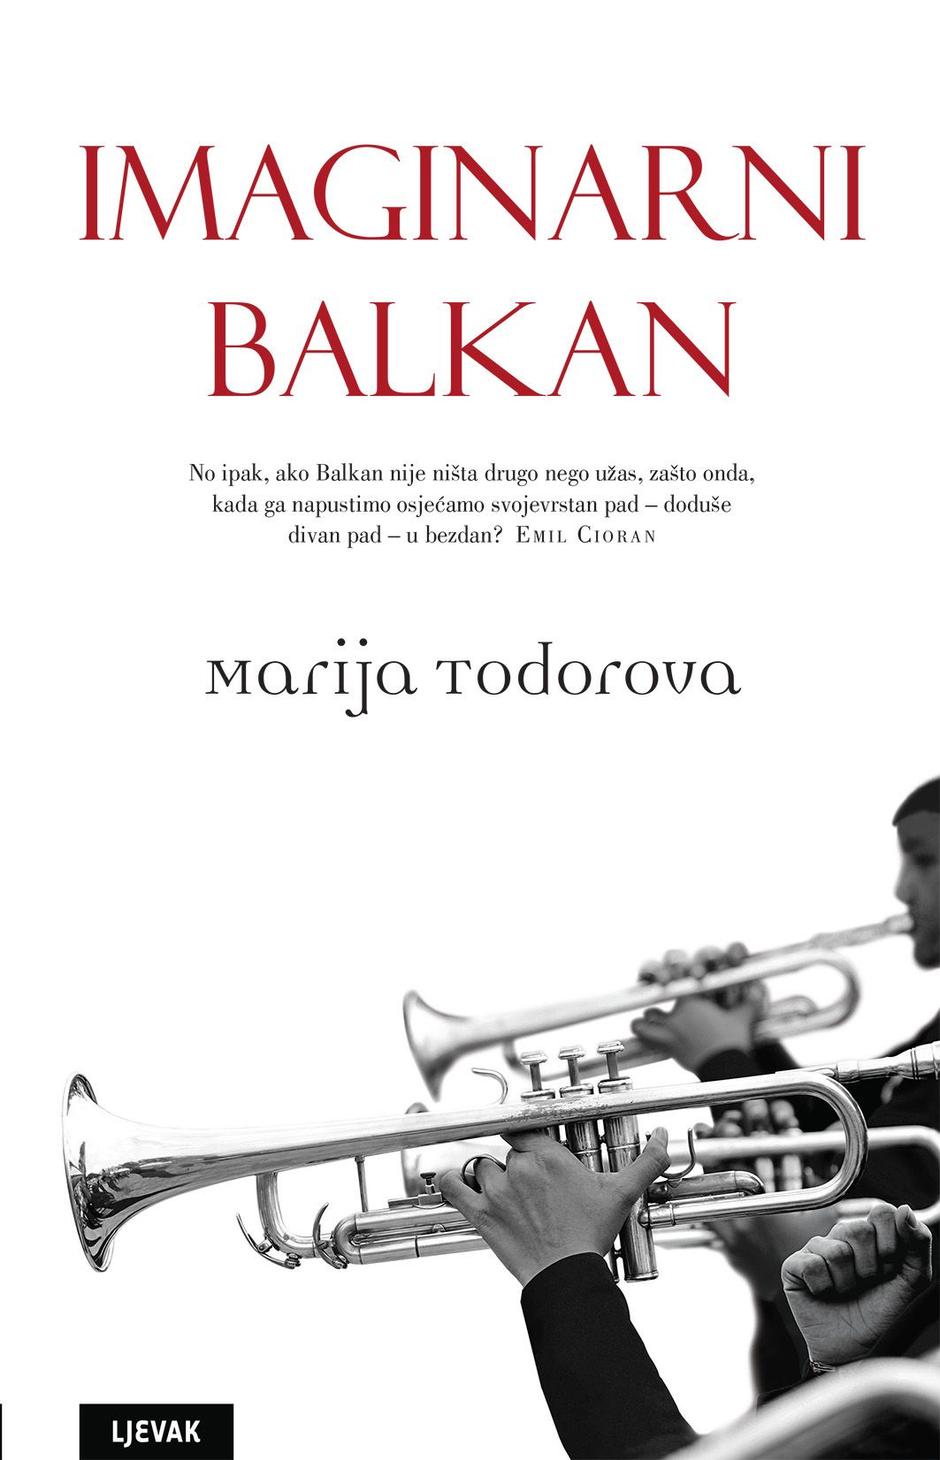 Imaginarni Balkan | Author: Ljevak